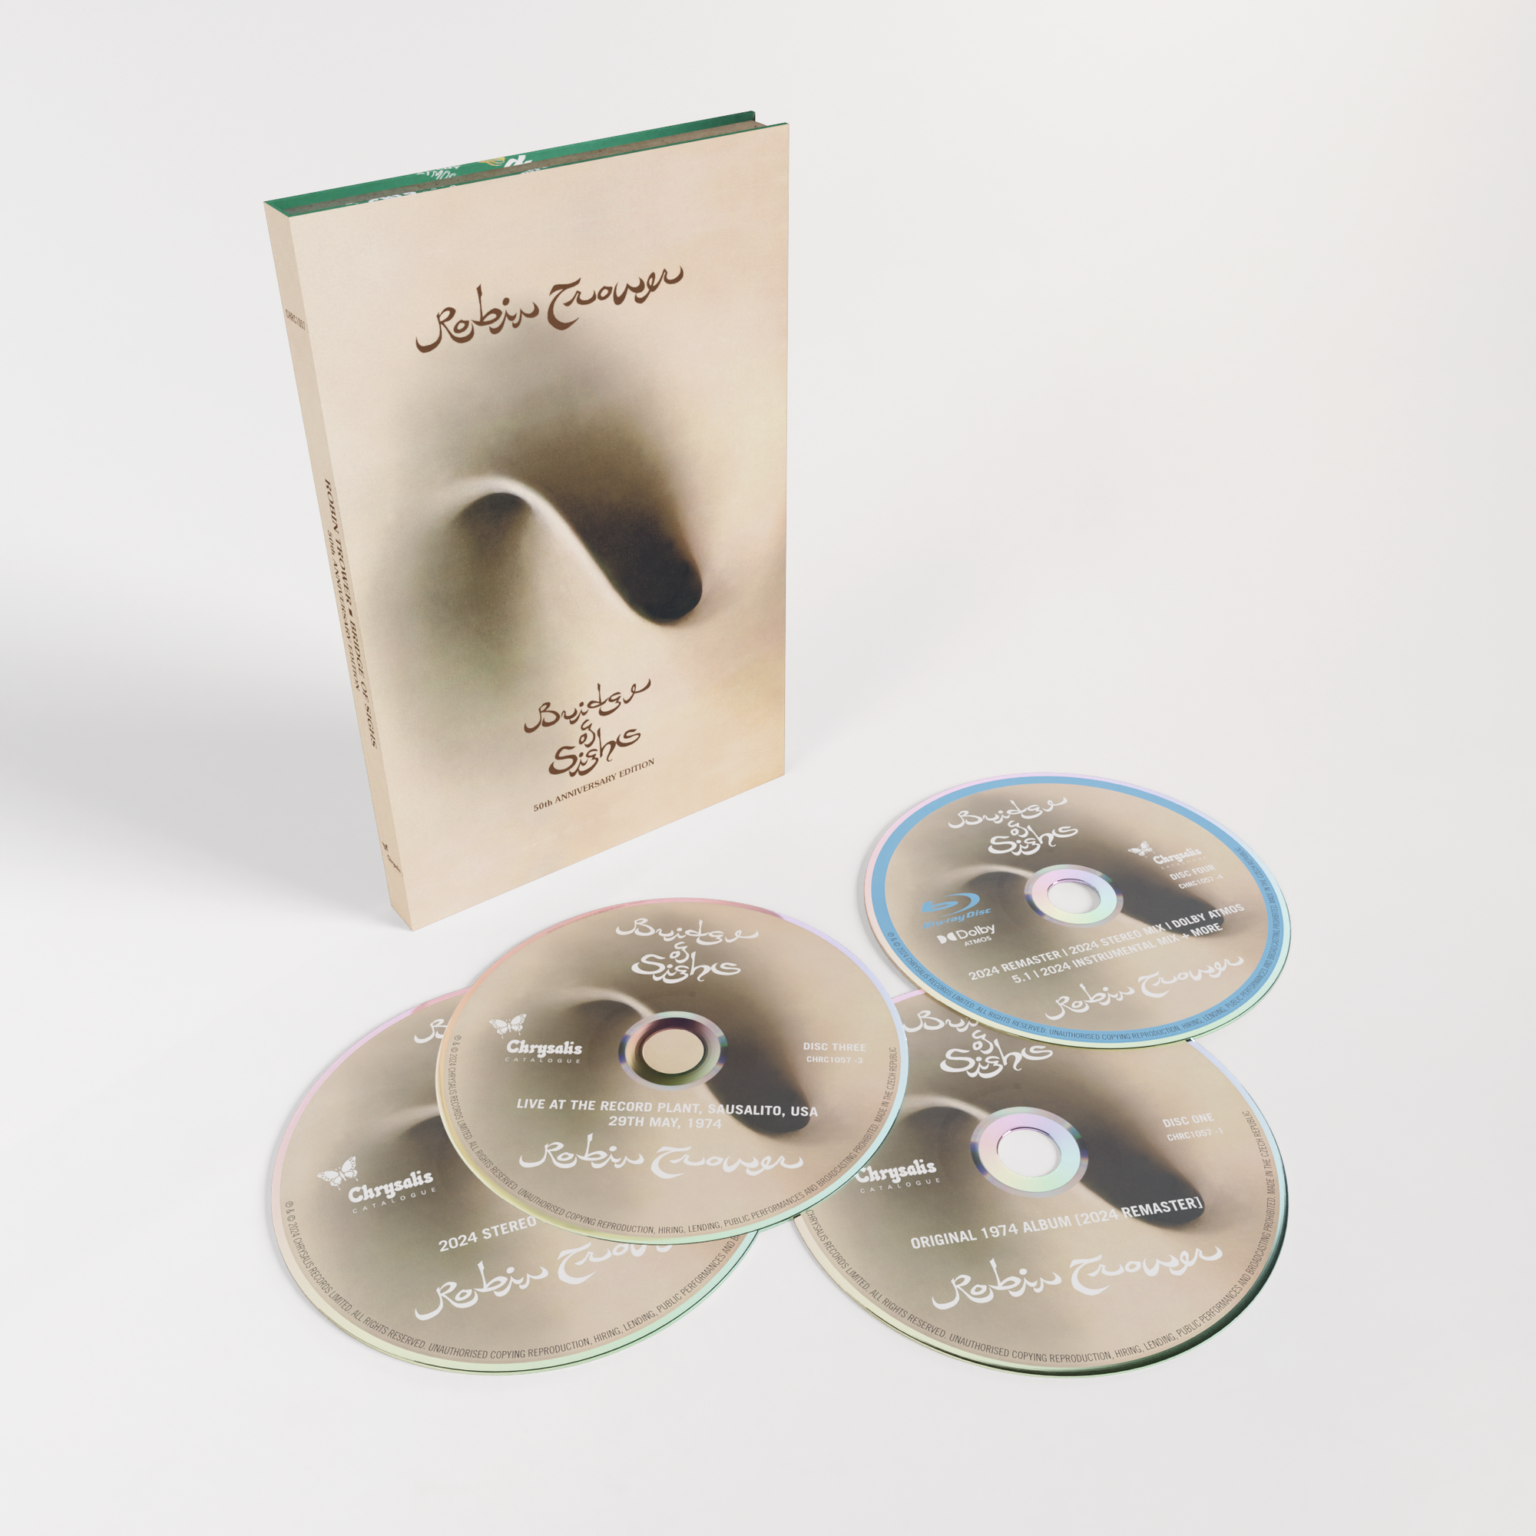 Robin-Trower-Bridge-Of-Sighs-50th-Anniversary-3CD-BD-Box-1536x1536.png